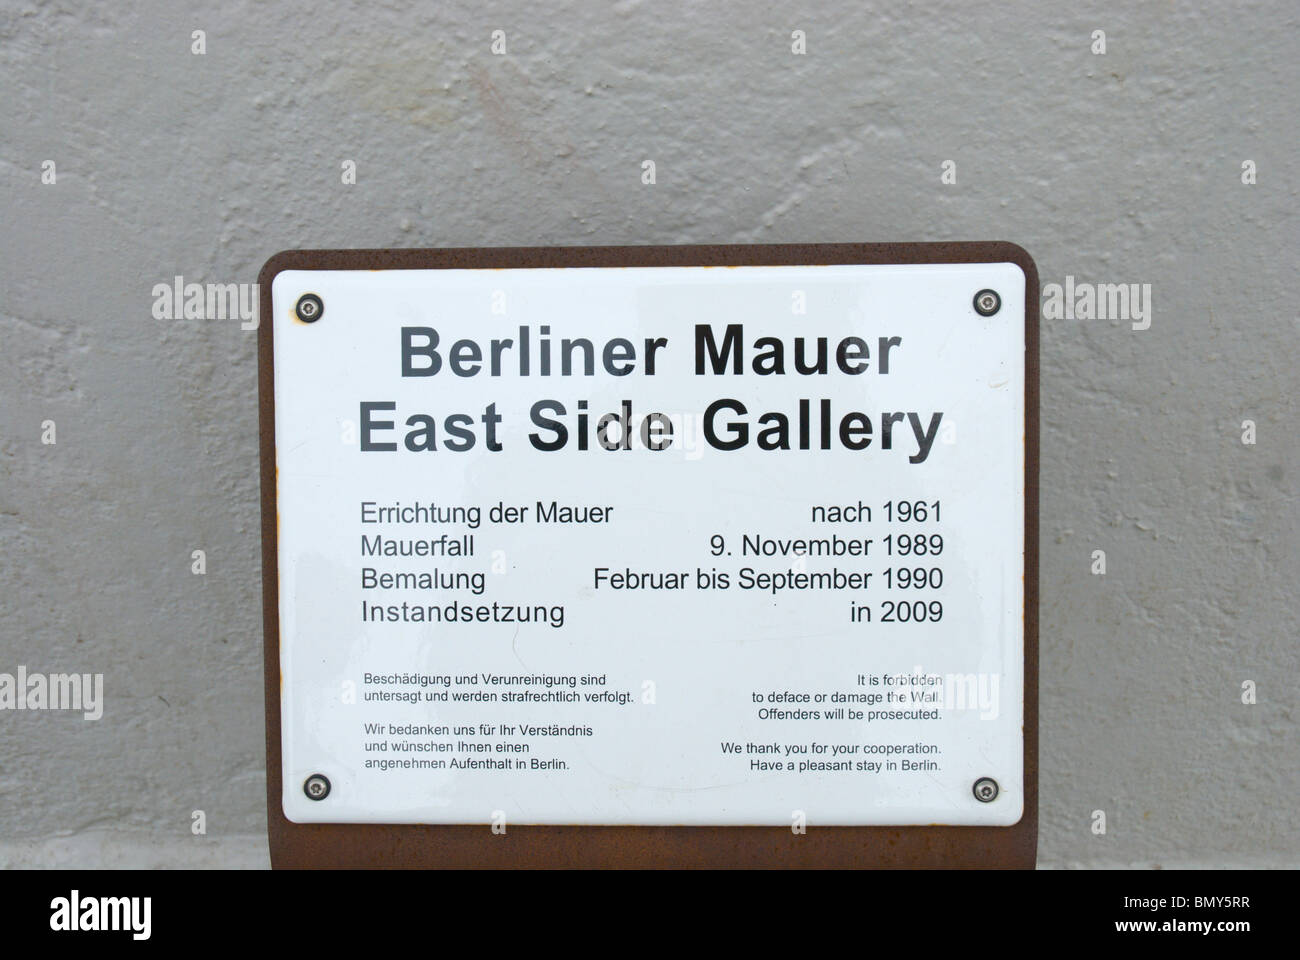 Berliner Mauer, mur de Berlin East Side Gallery Friedrichshain Berlin Allemagne Europe de l'Est Banque D'Images